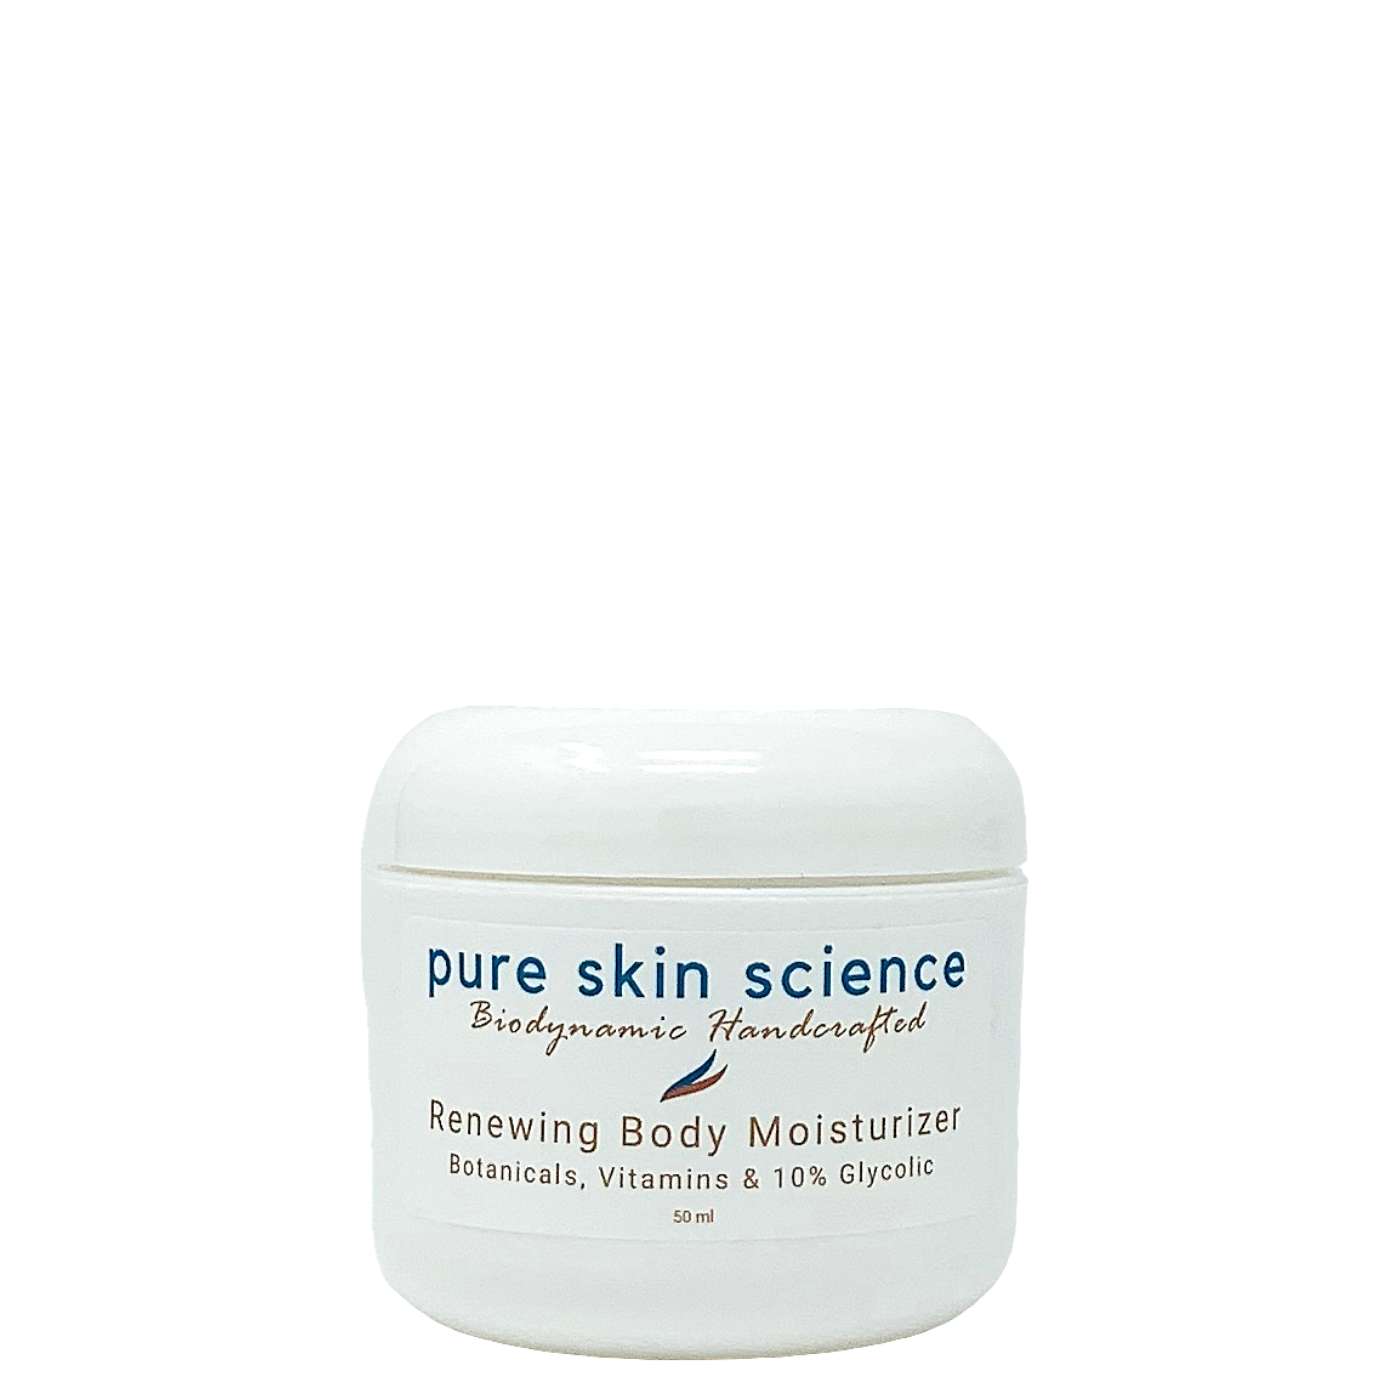 Renewing Body Moisturizer by Pure Skin Science